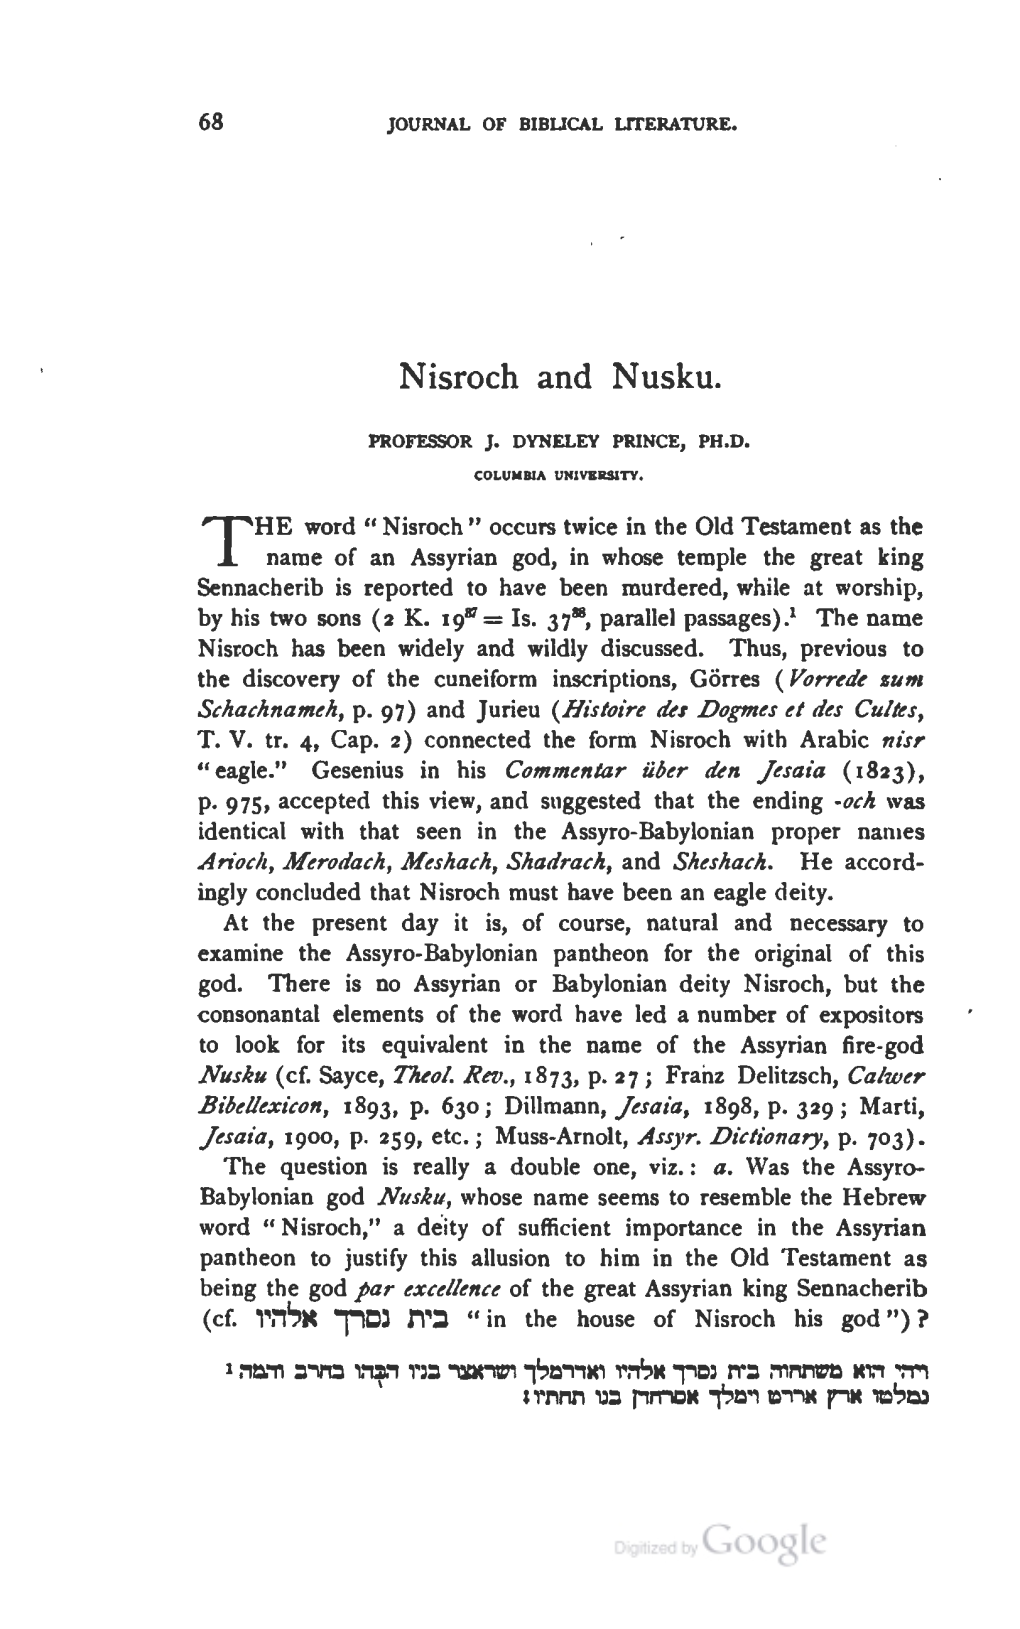 "Nisroch and Nusku," Journal of Biblical Literature 23.1 (1904)